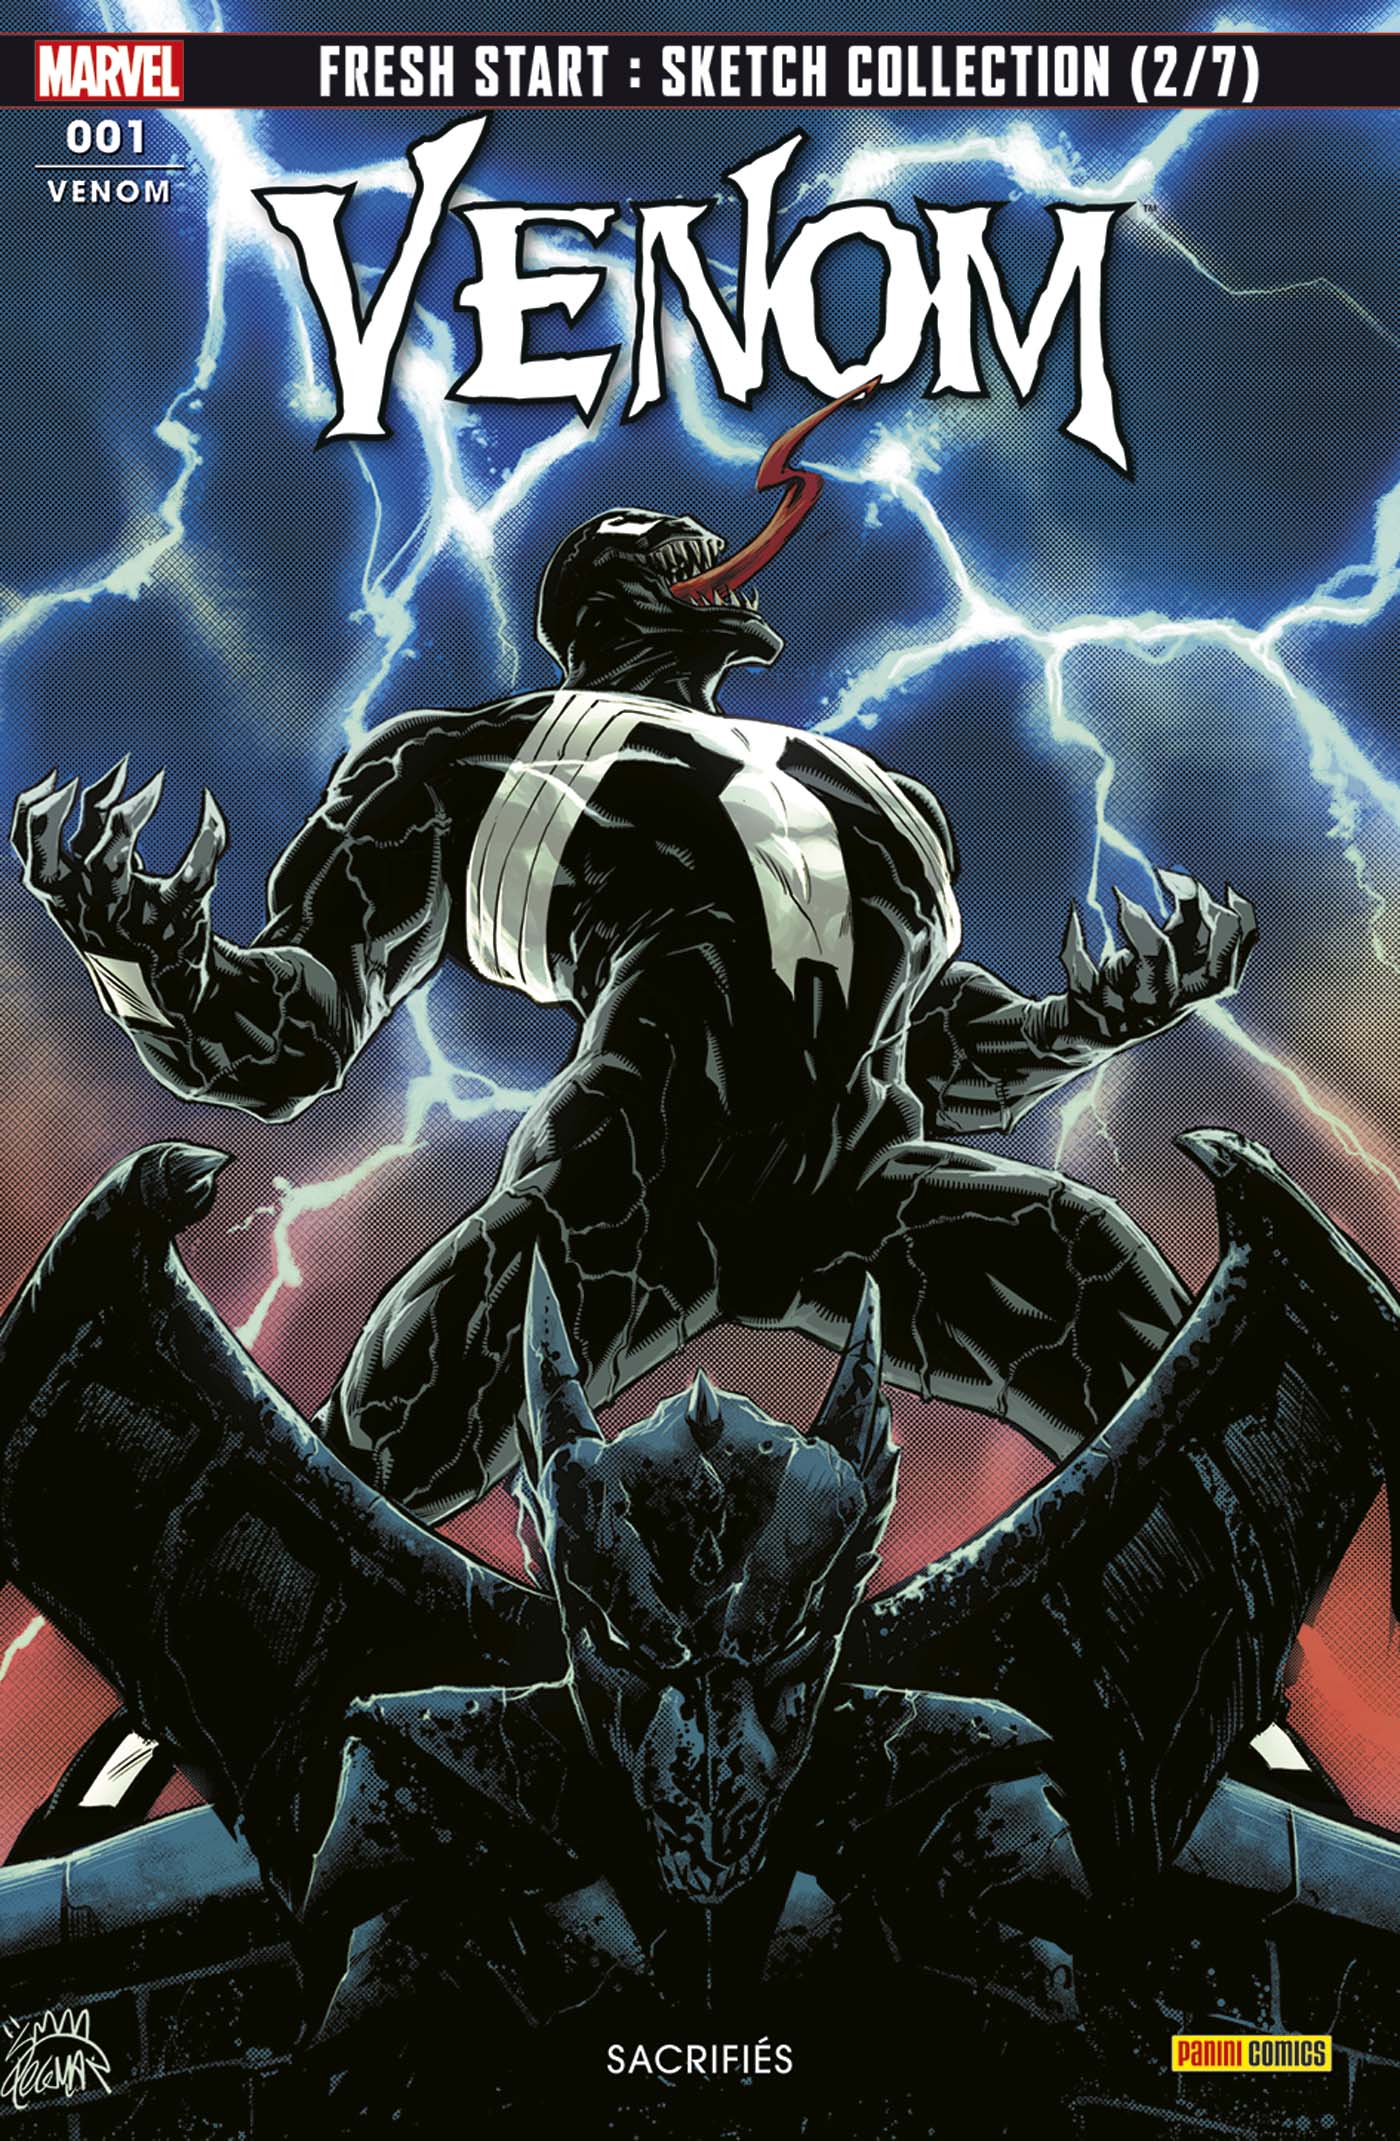 Venom #1